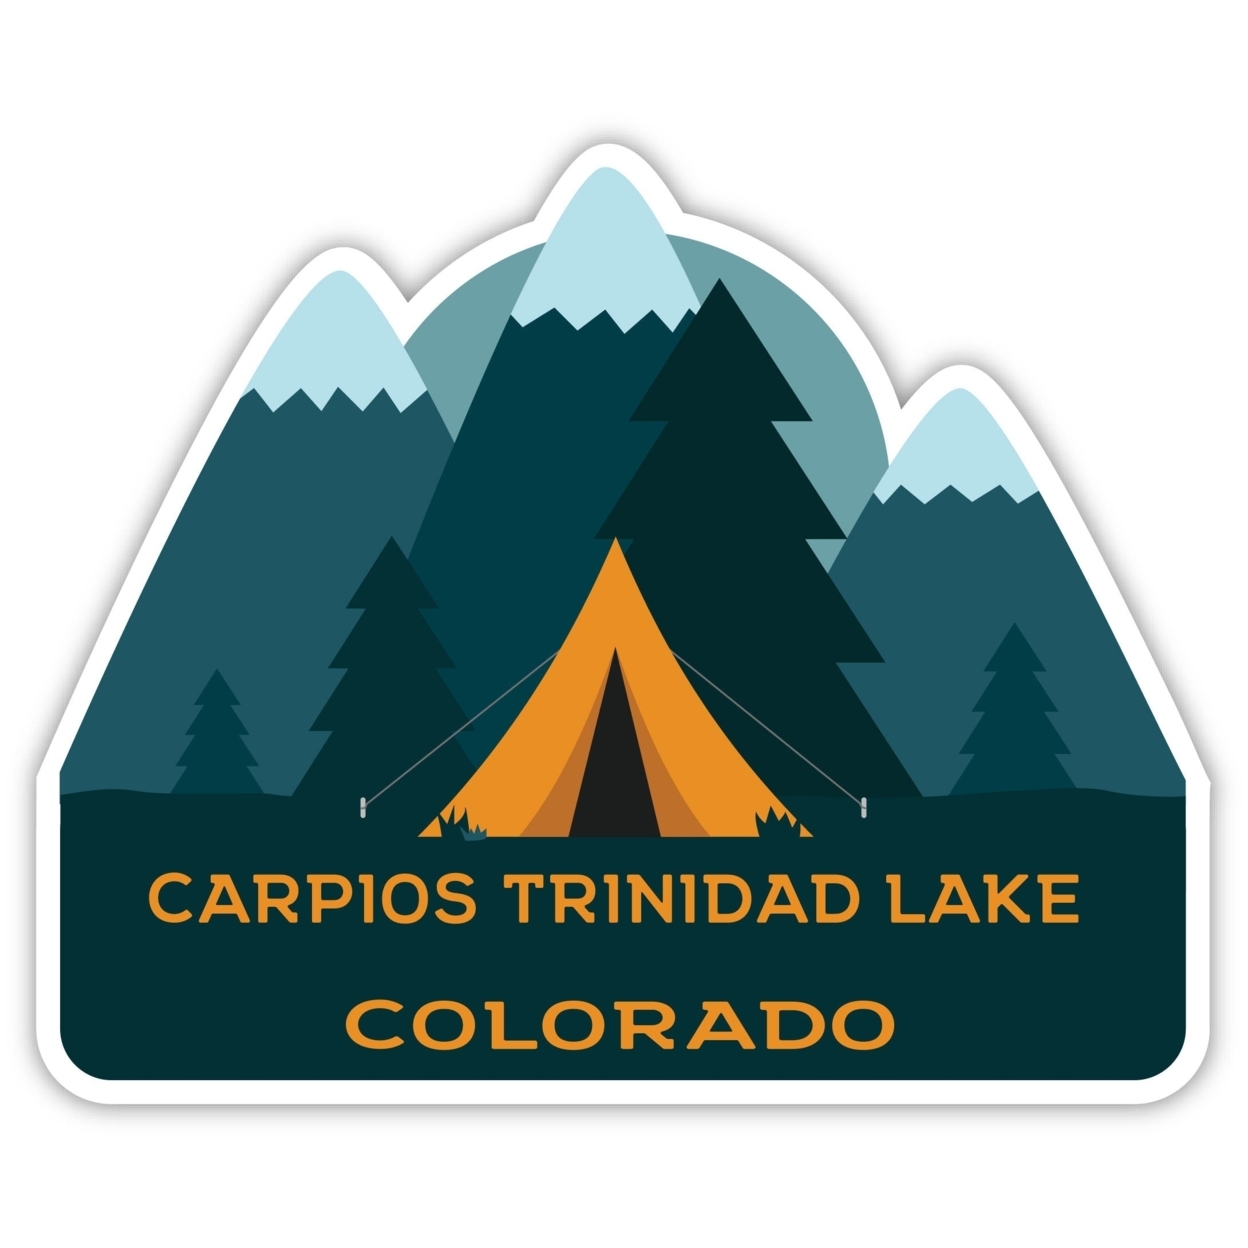 Carpios Trinidad Lake Colorado Souvenir Decorative Stickers (Choose Theme And Size) - 4-Pack, 12-Inch, Tent